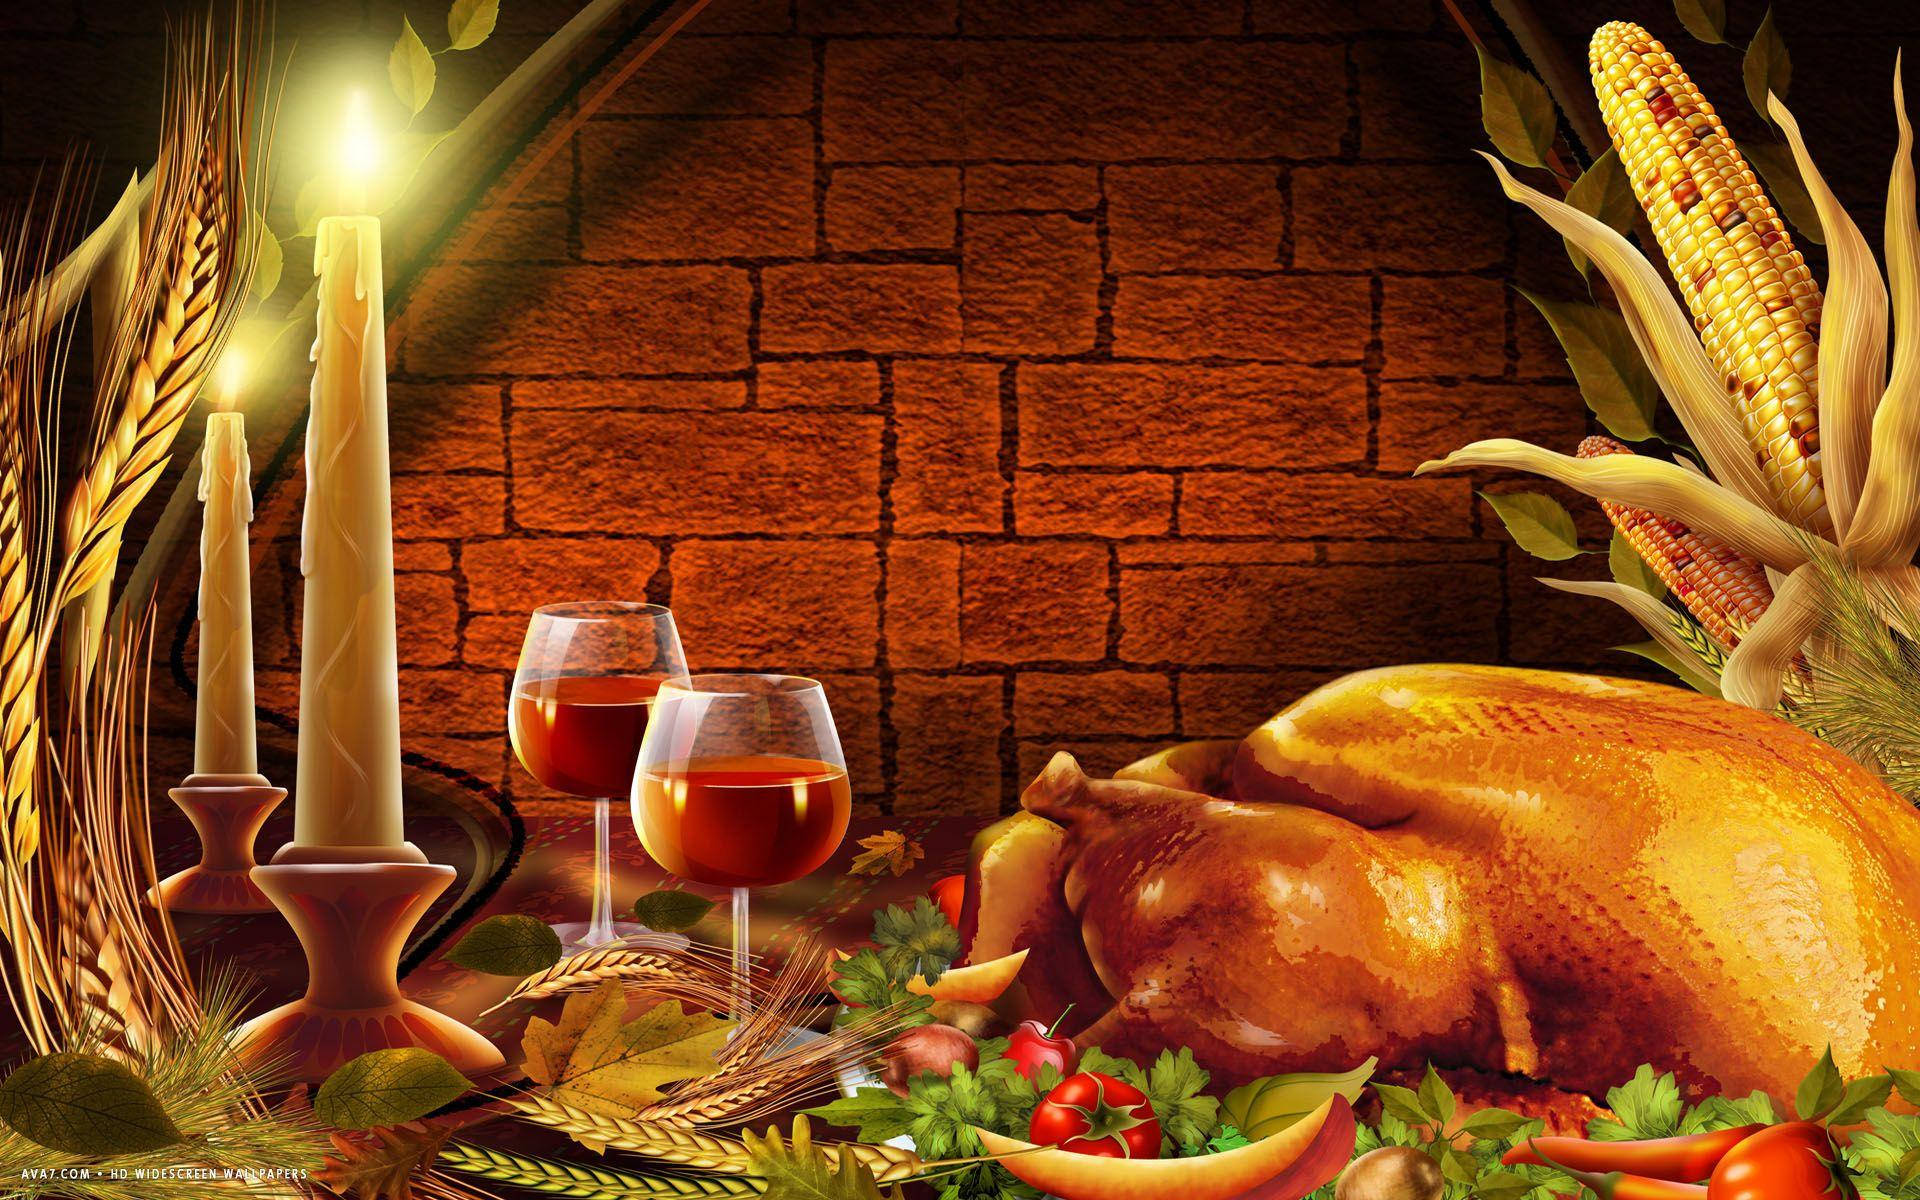 Happy Thanksgiving from Turkey! Wallpaper